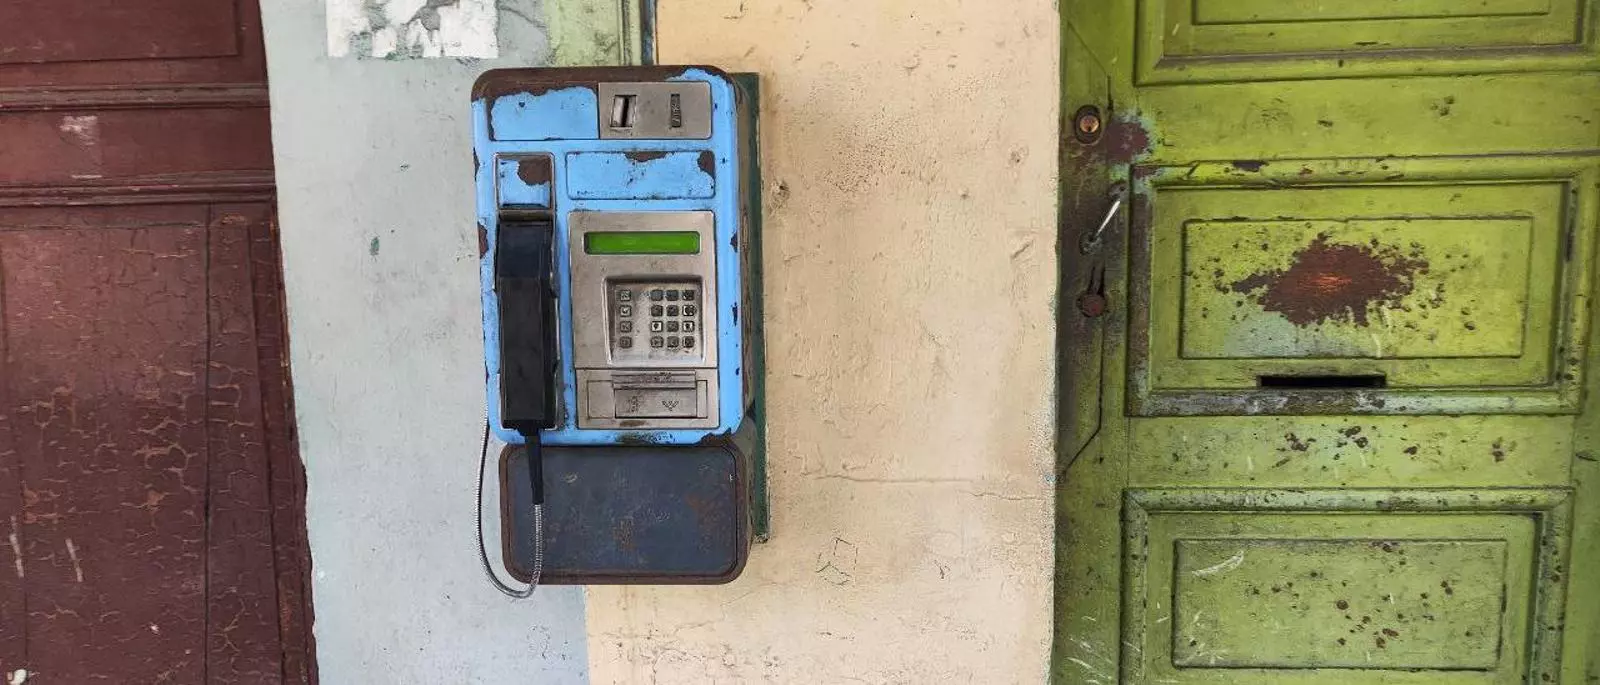 dirty-or-broken,-public-pay-phones-survive-in-cuba